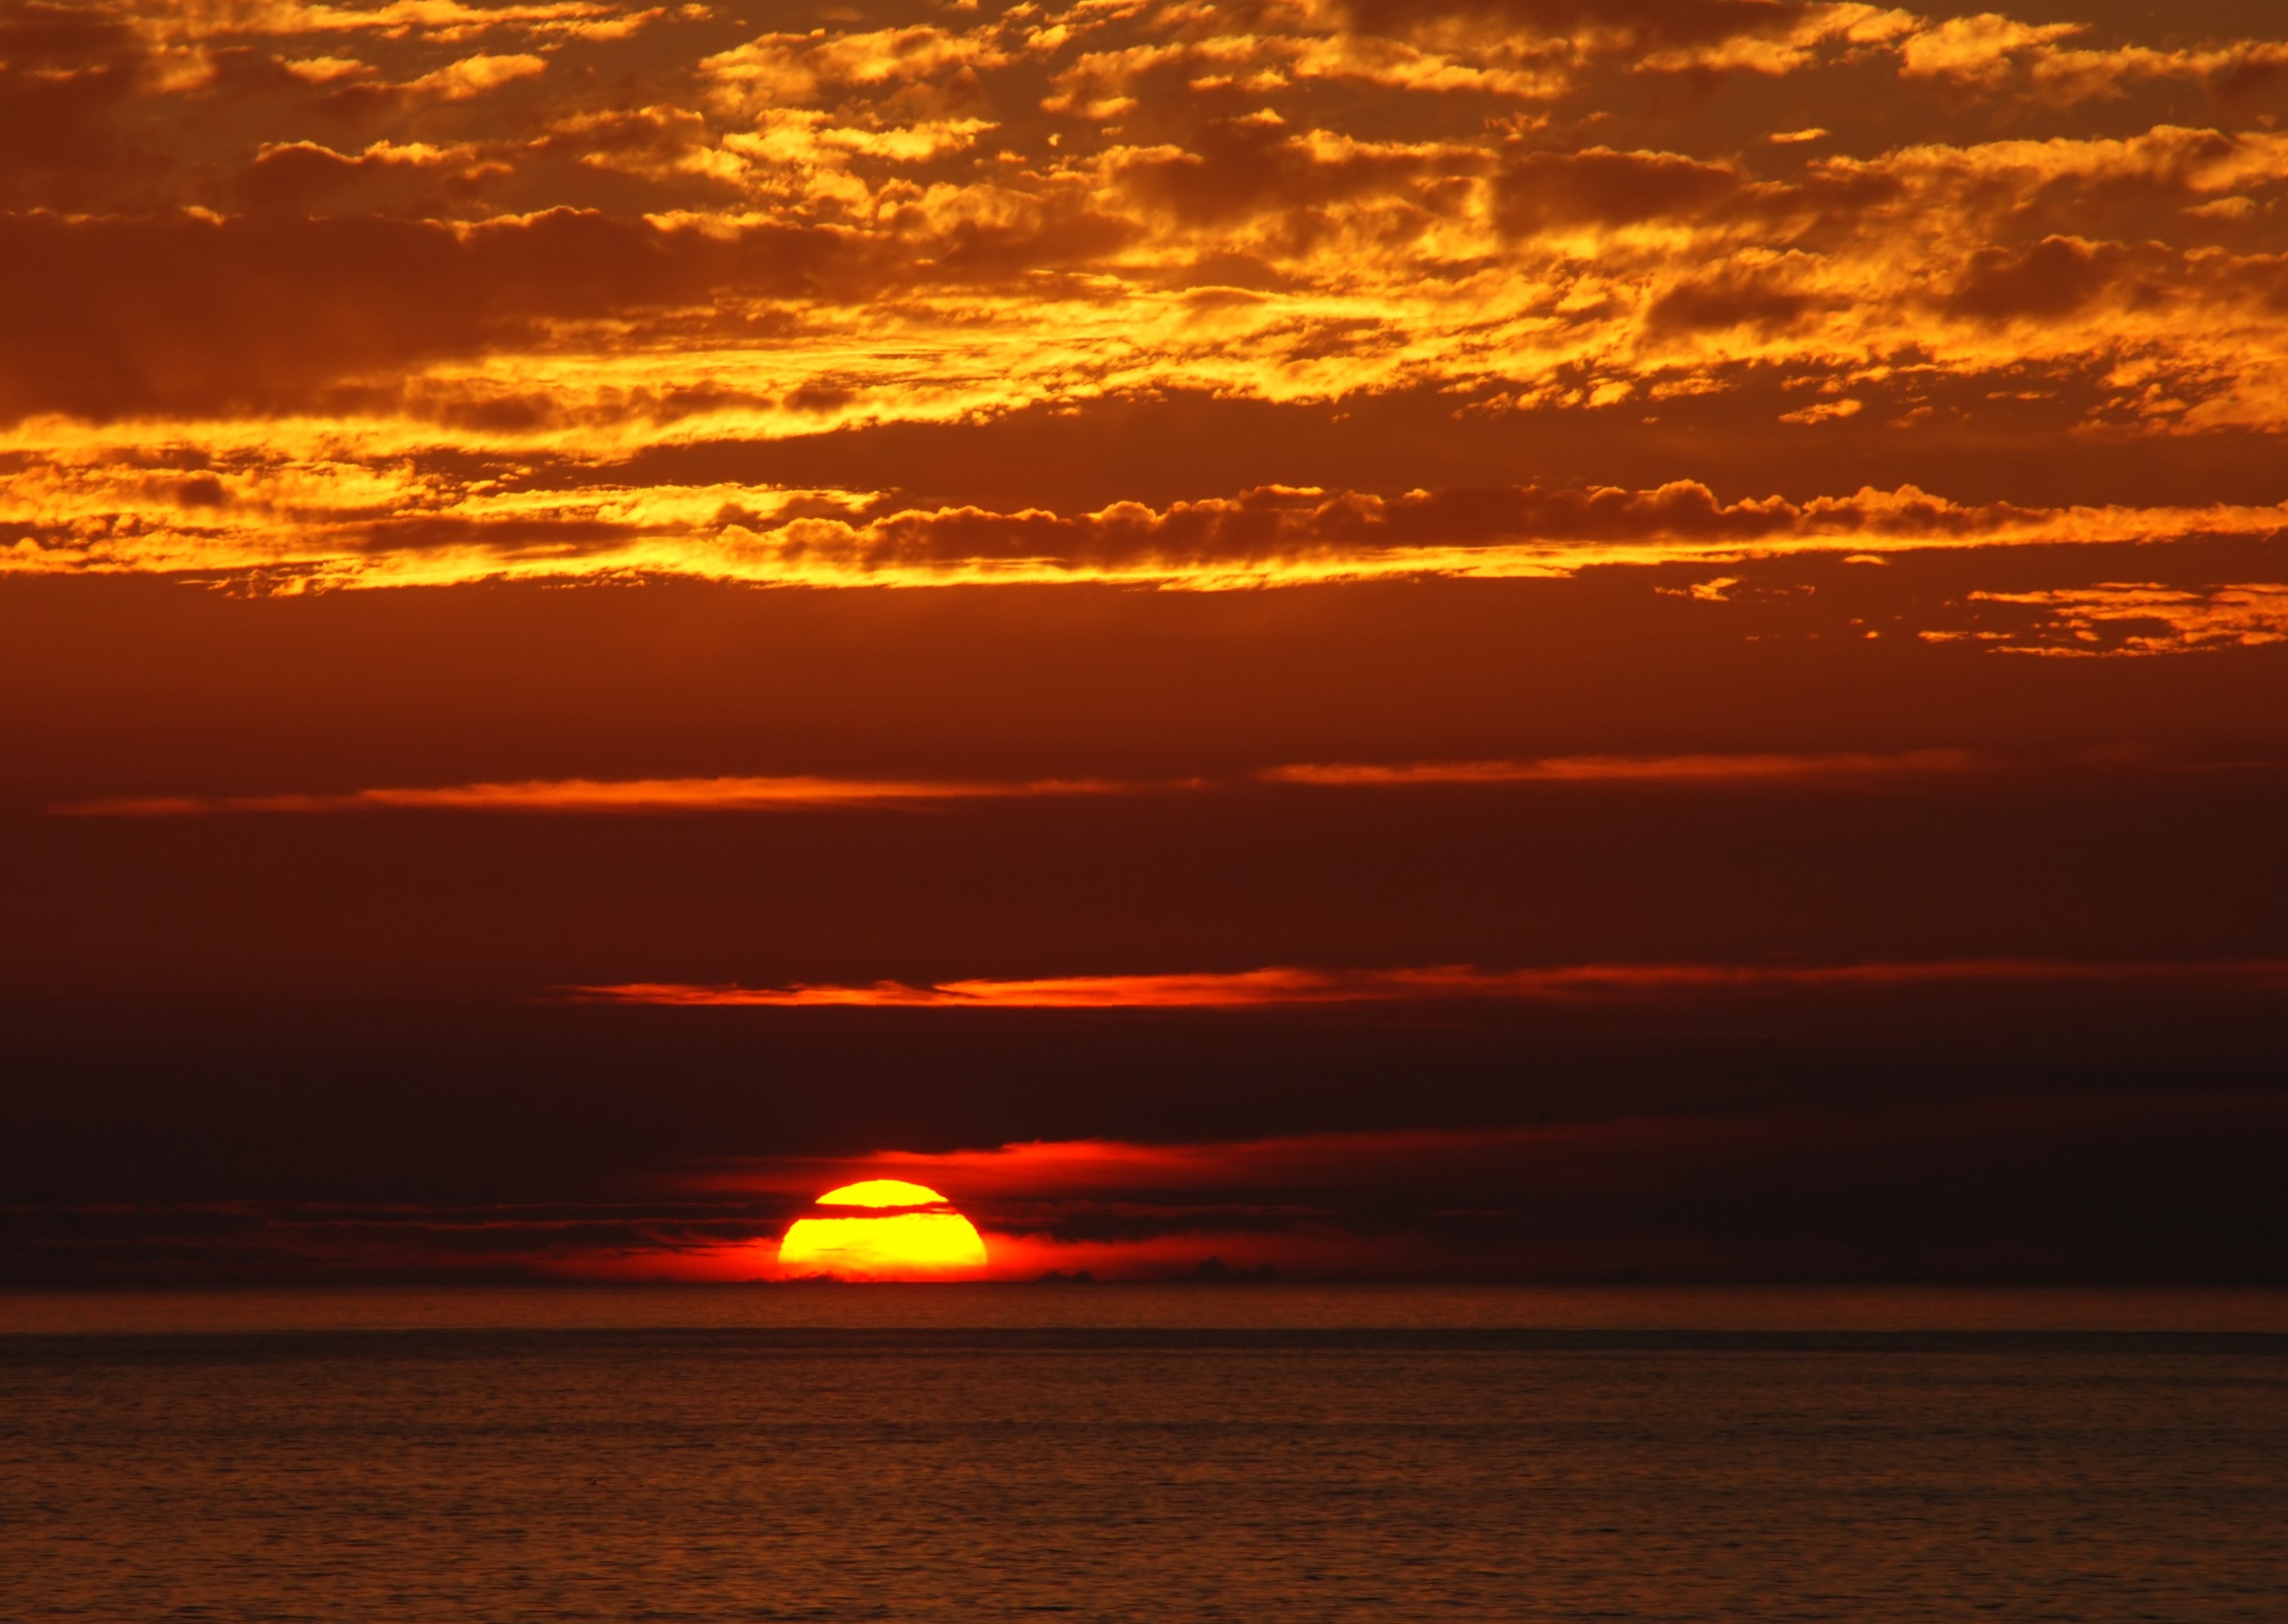 Image result for sunset